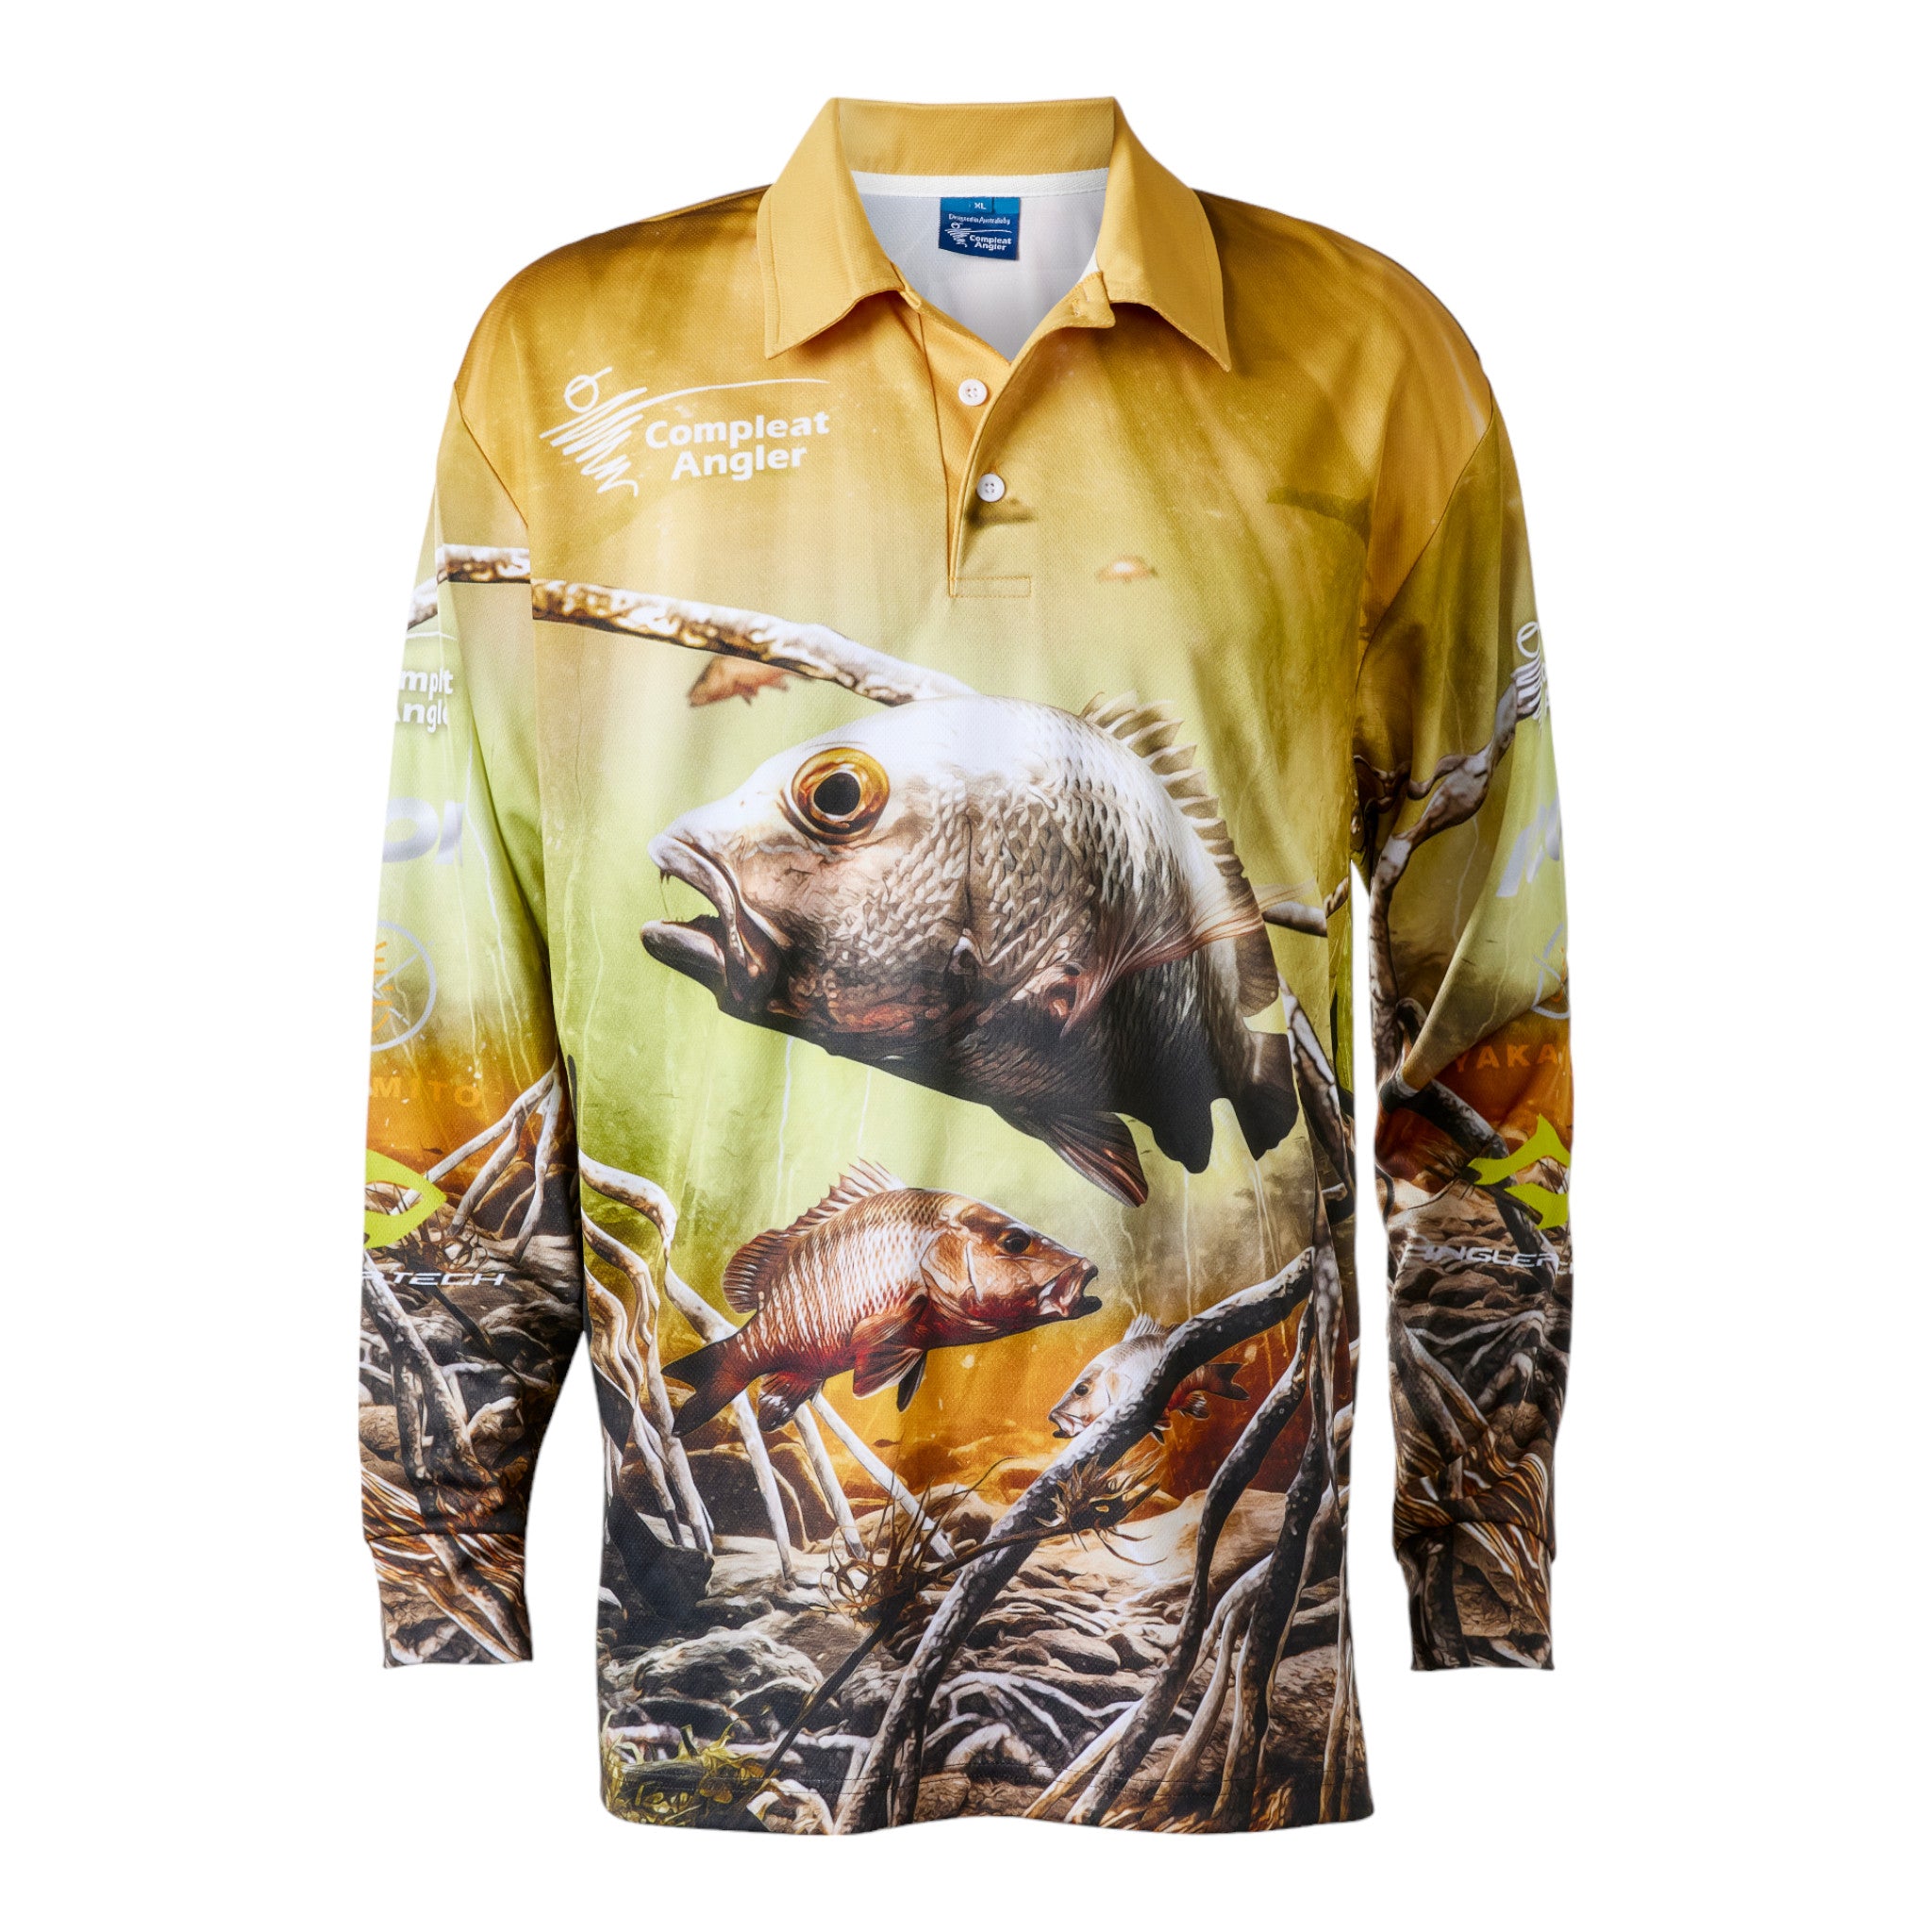 Jack Fishing Shirt